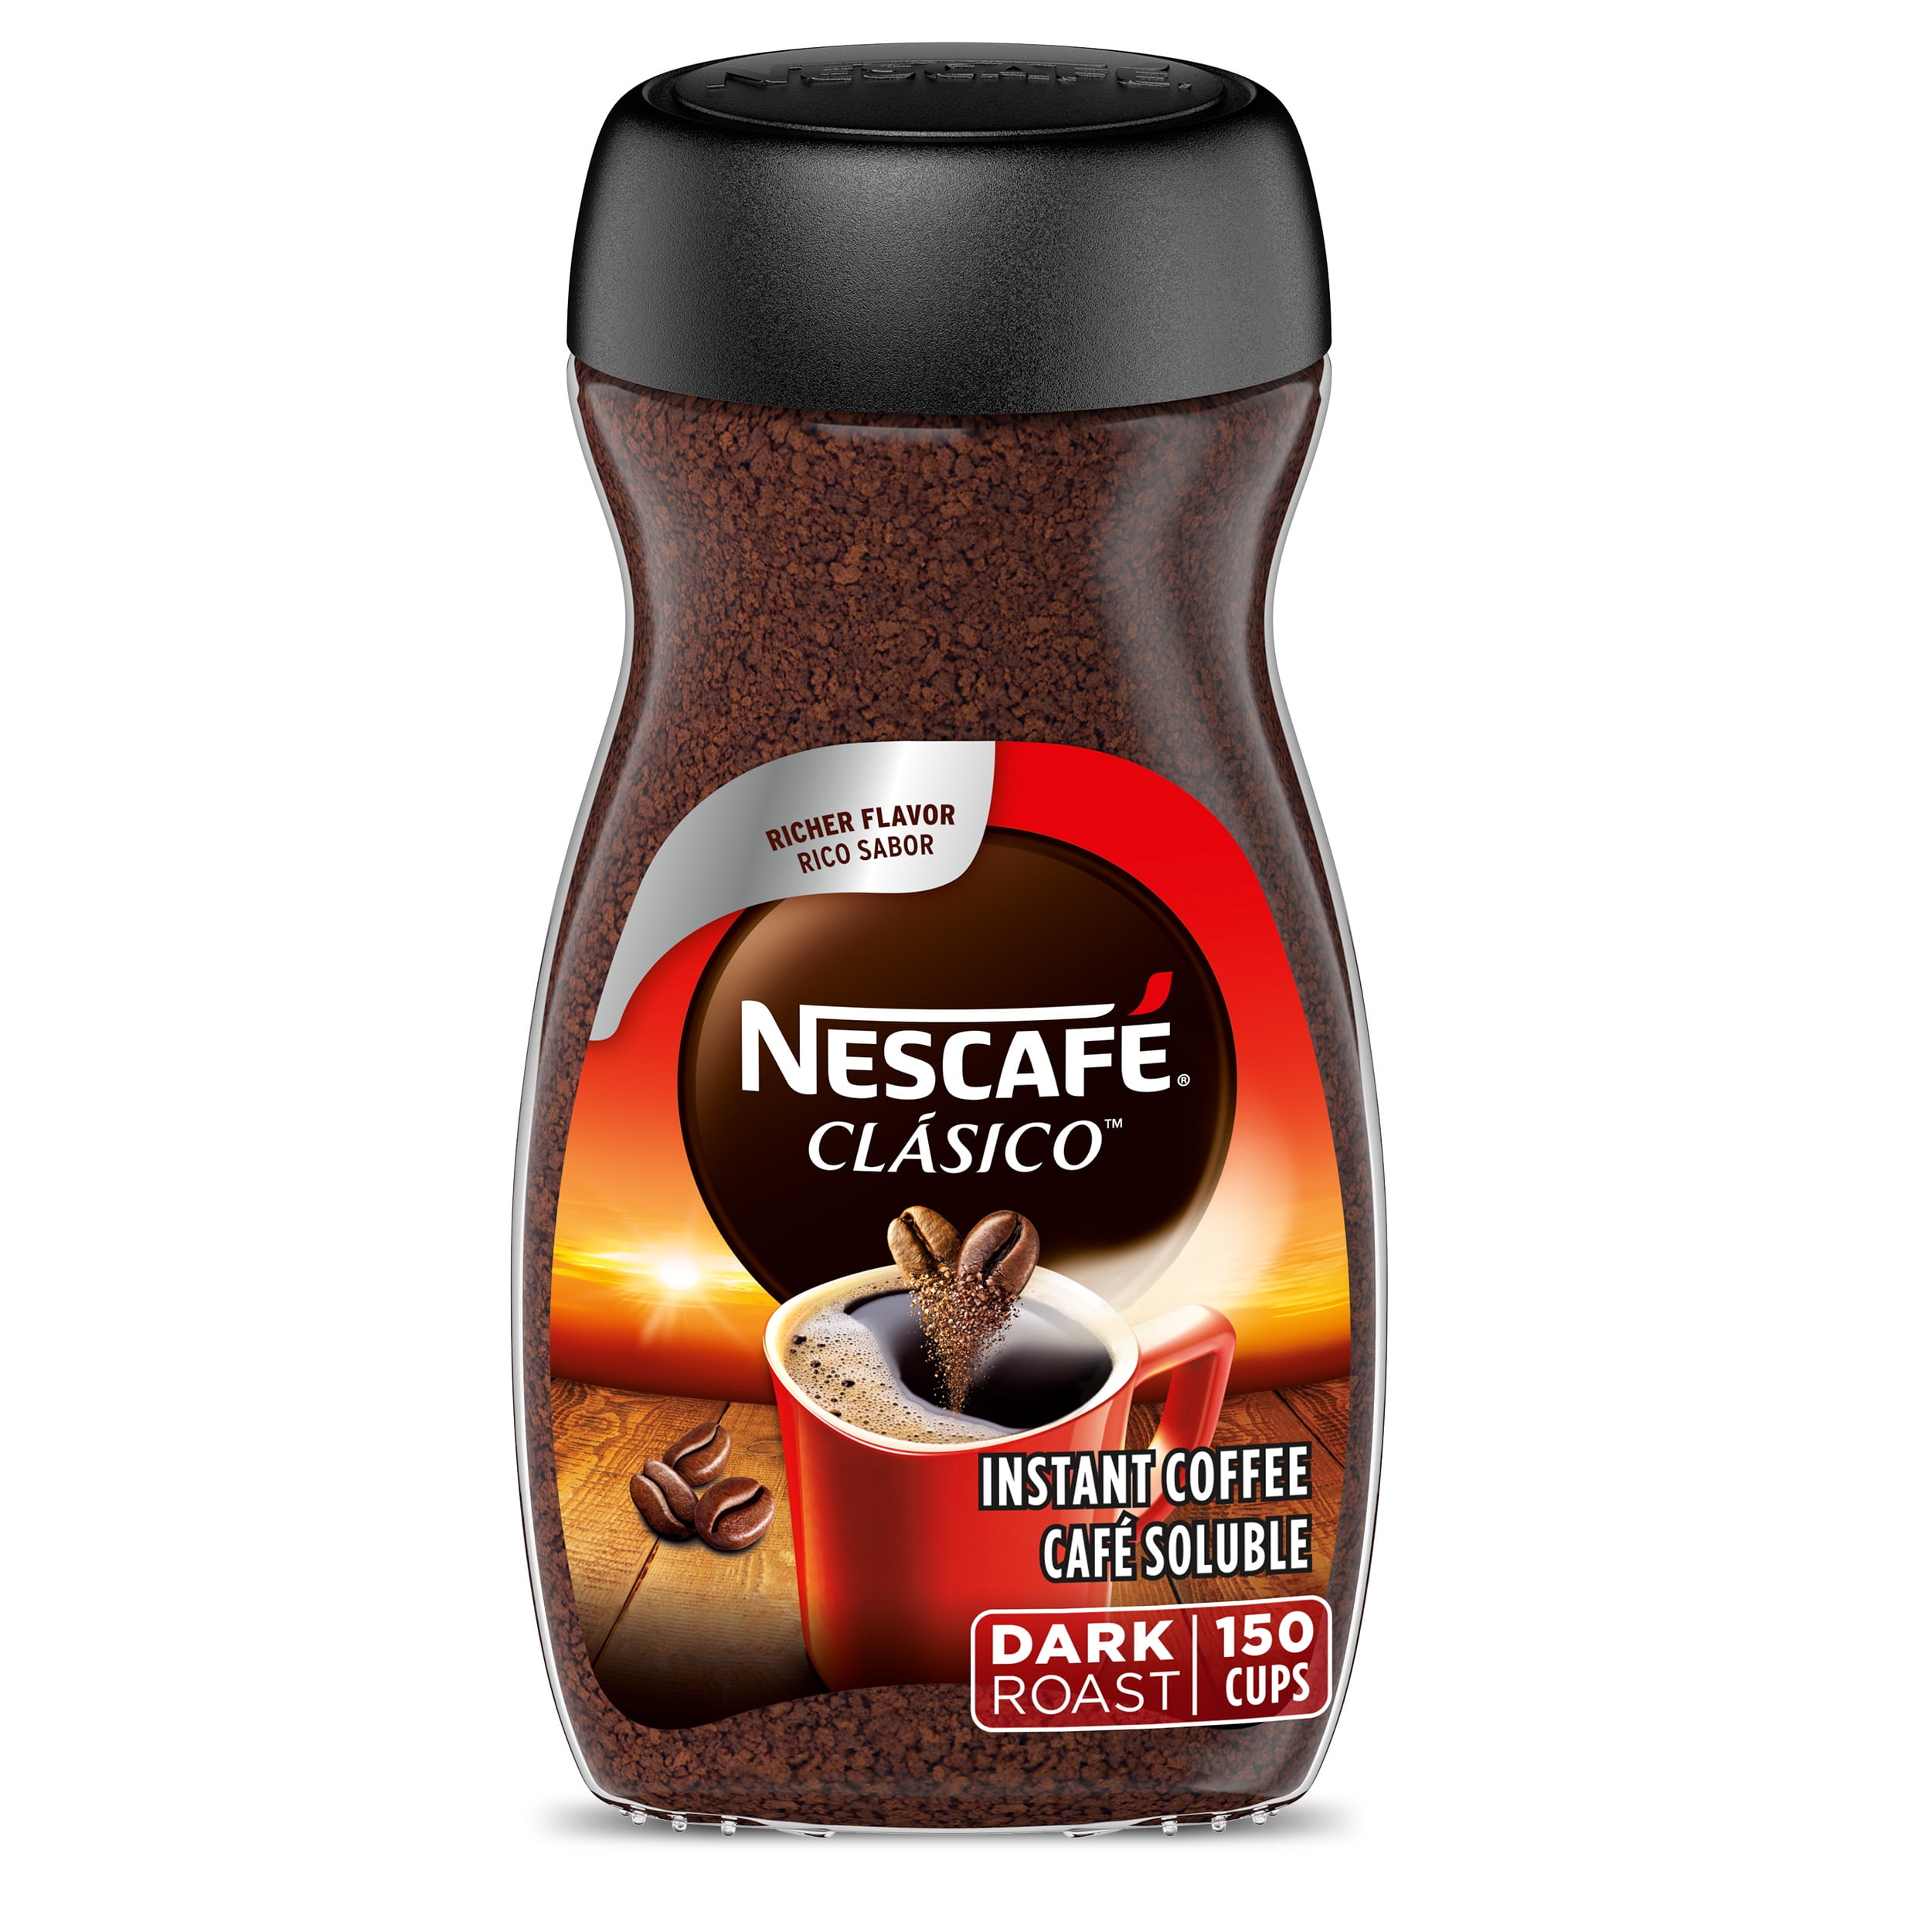 Nescafe 3 in 1 Classic Instant Coffee 165g (10 sticks)